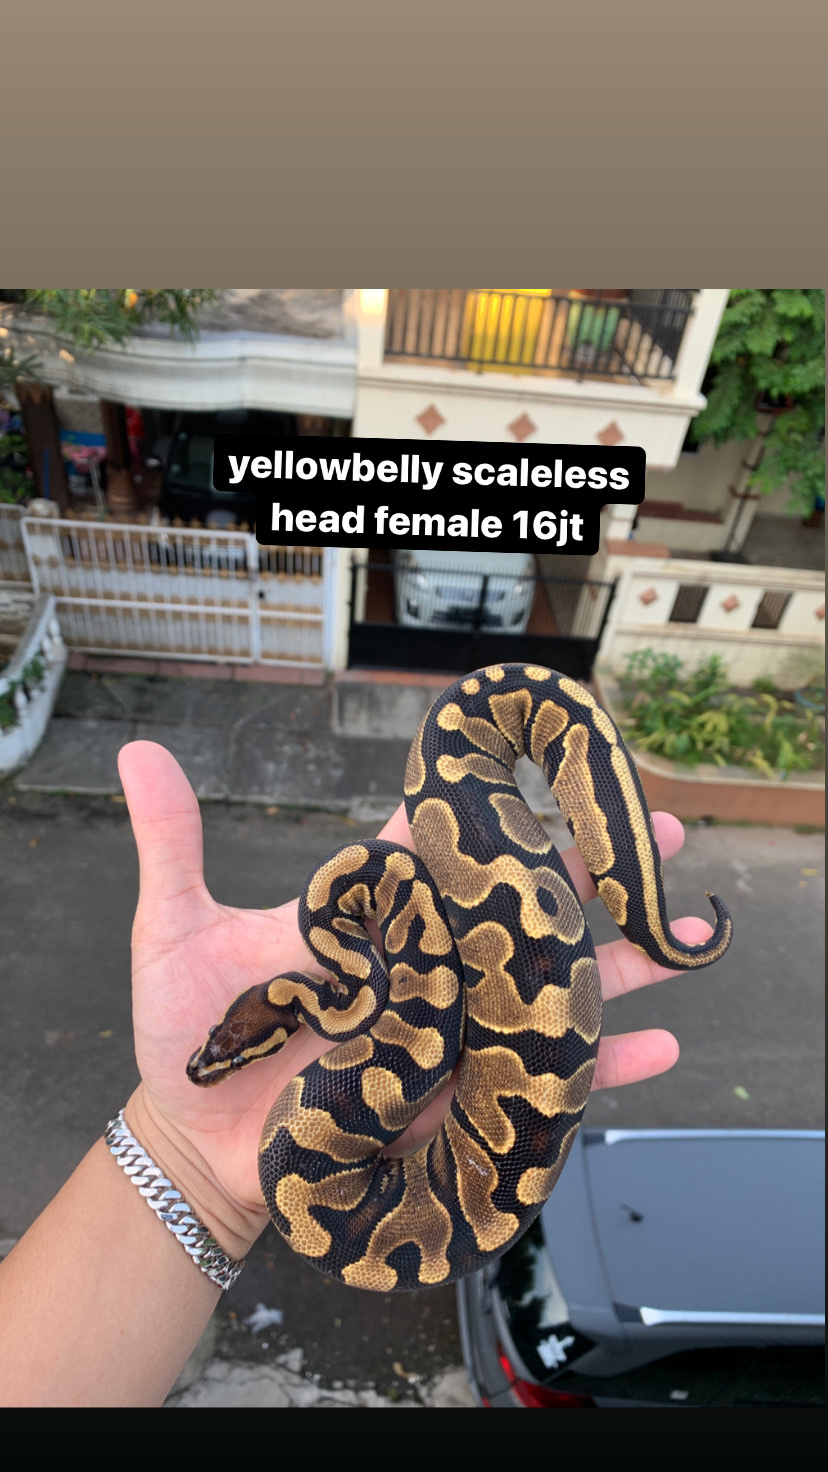 scaleless head yellowbelly female ball python + jual ballpython murah